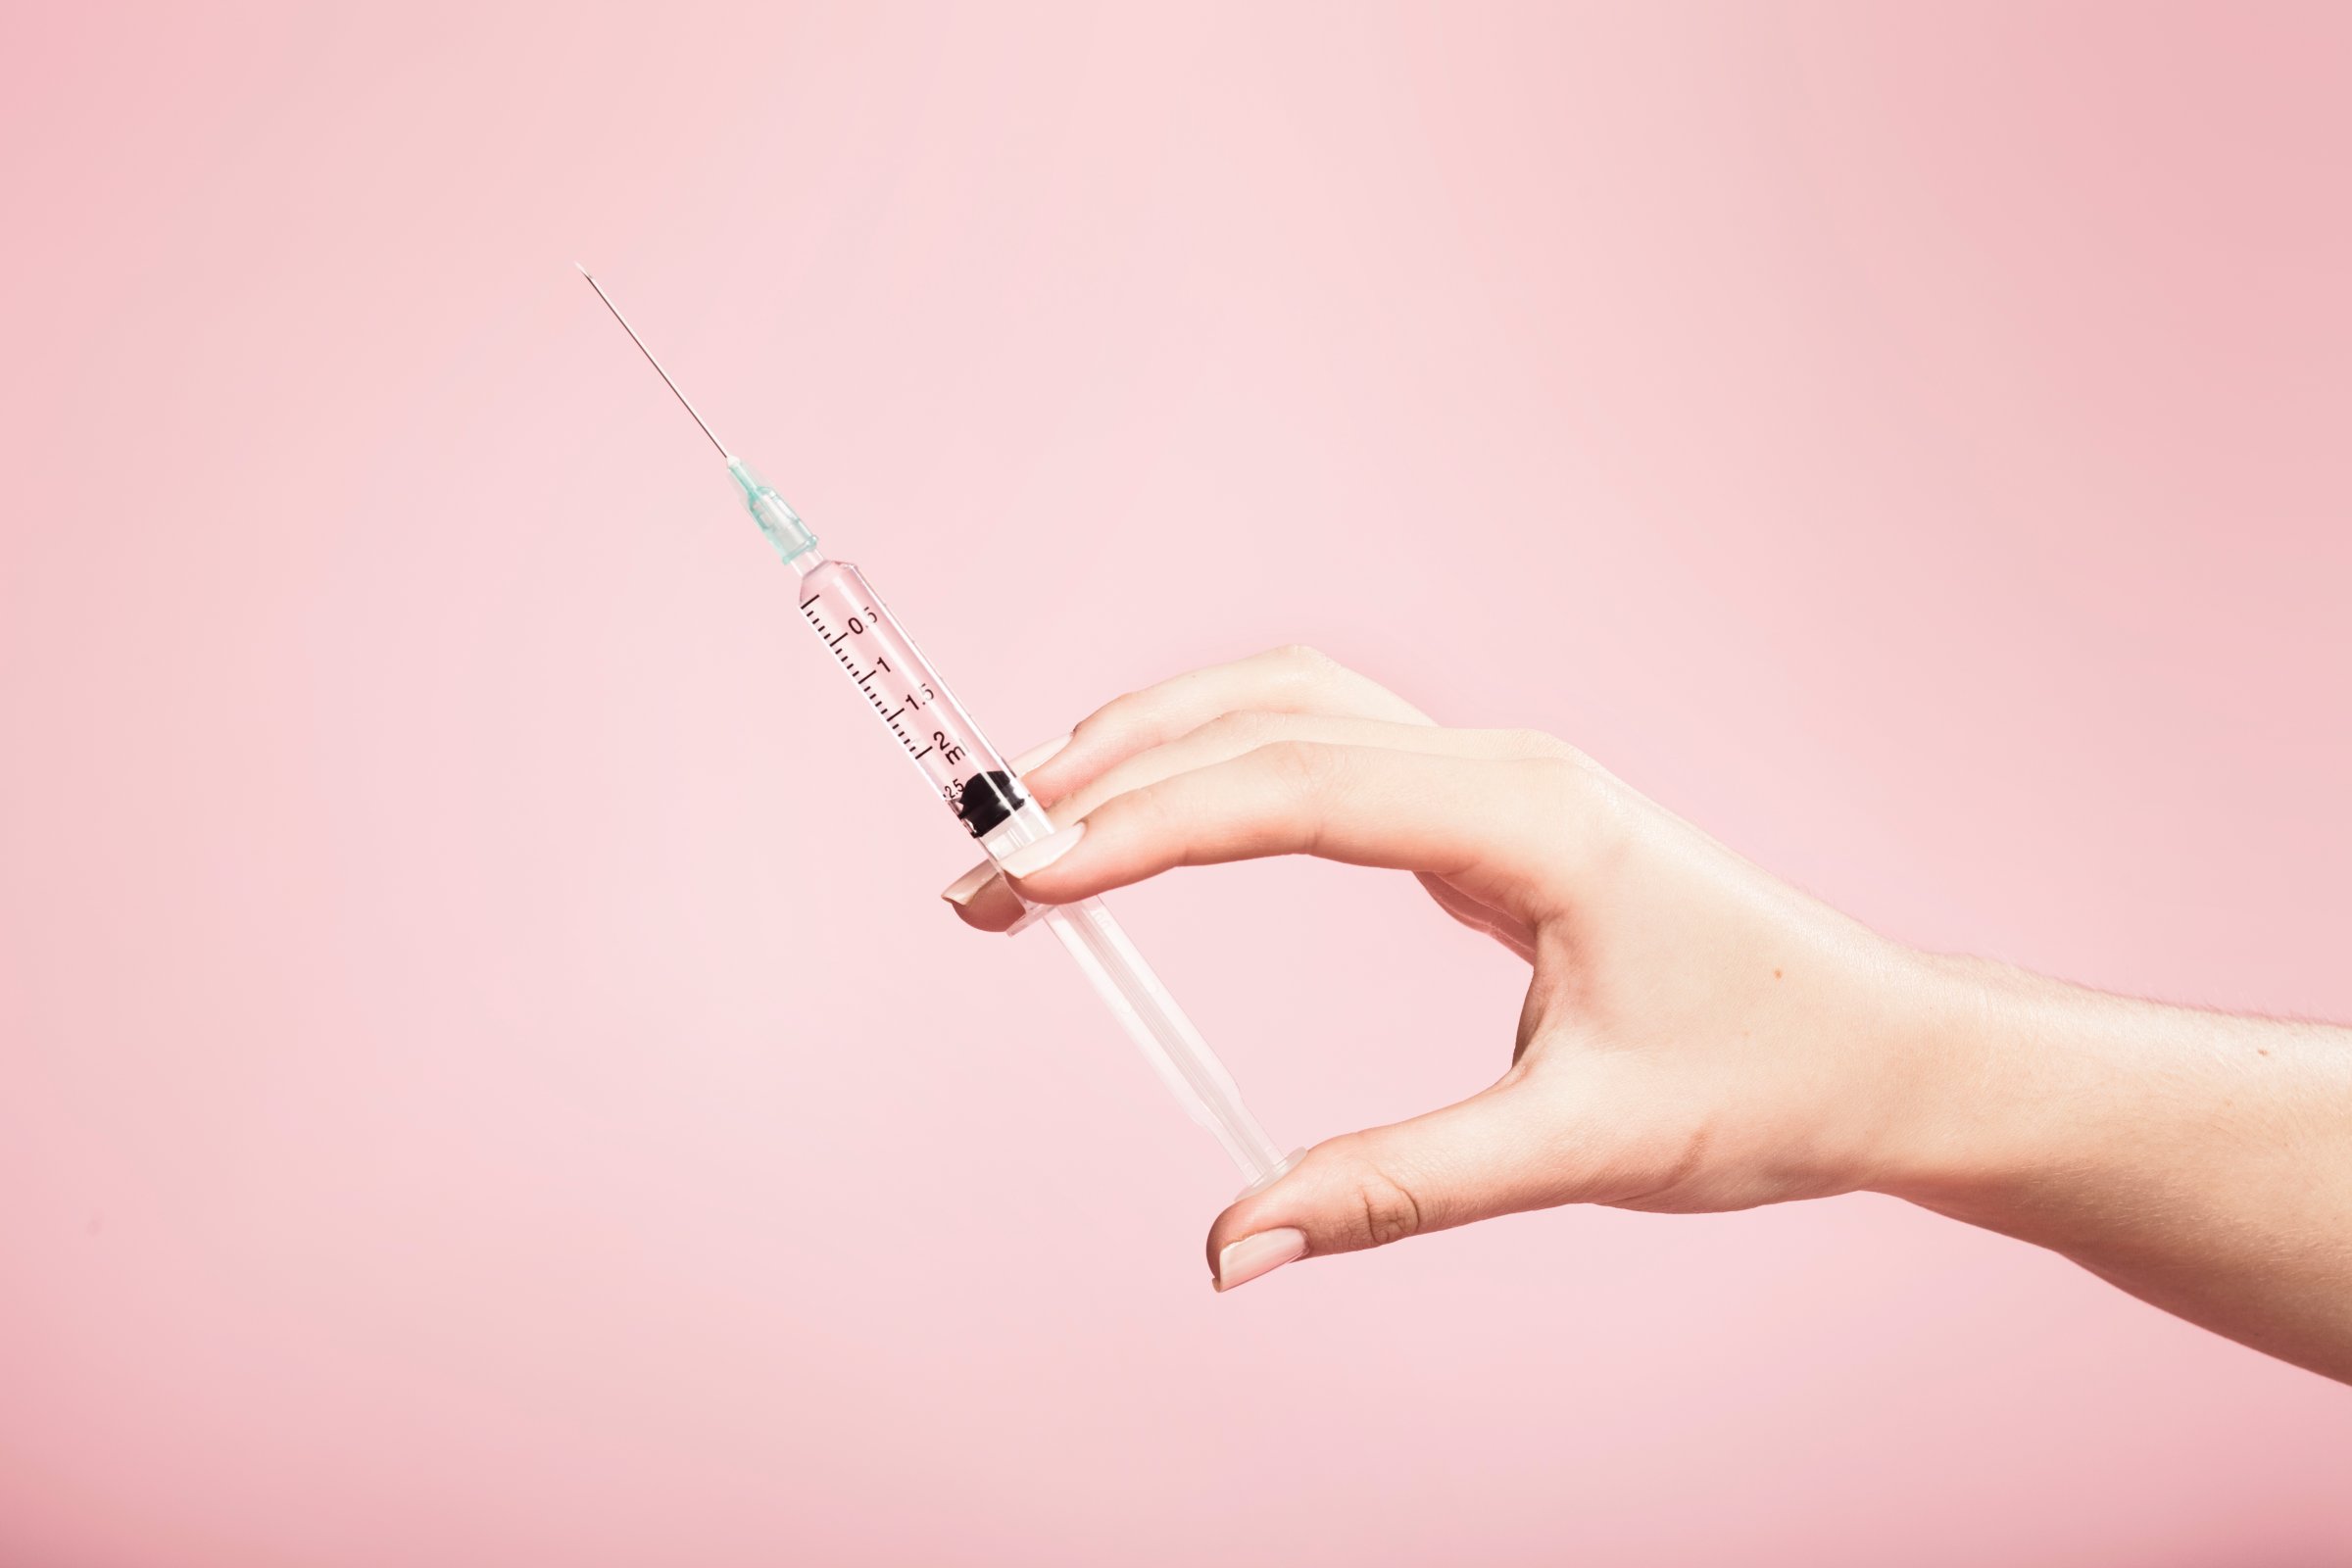 Hand holding syringe in plain pink background